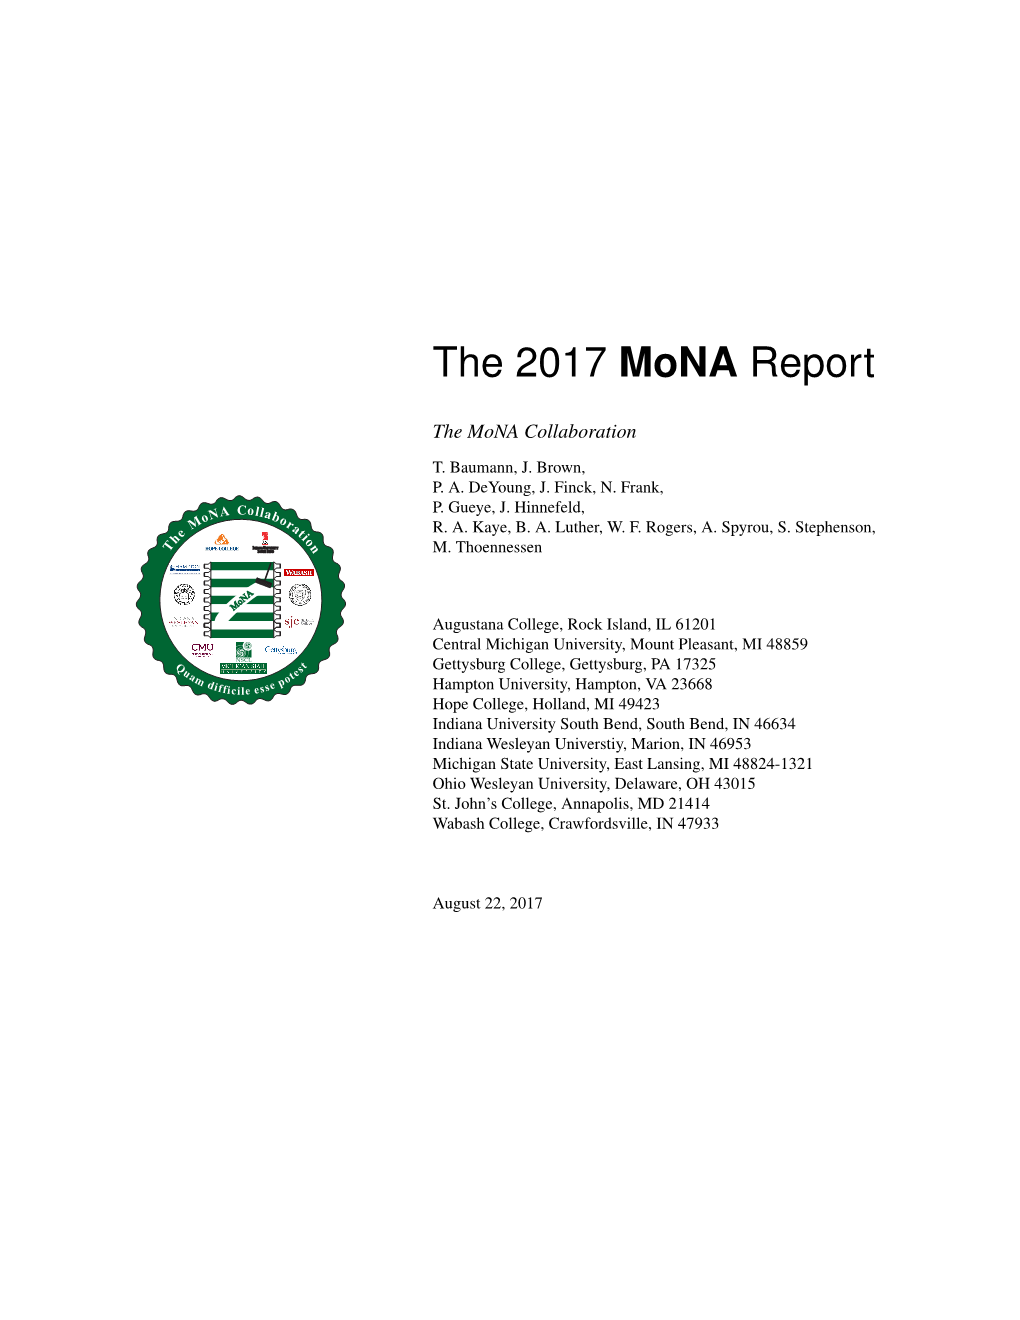 The 2017 Mona Report